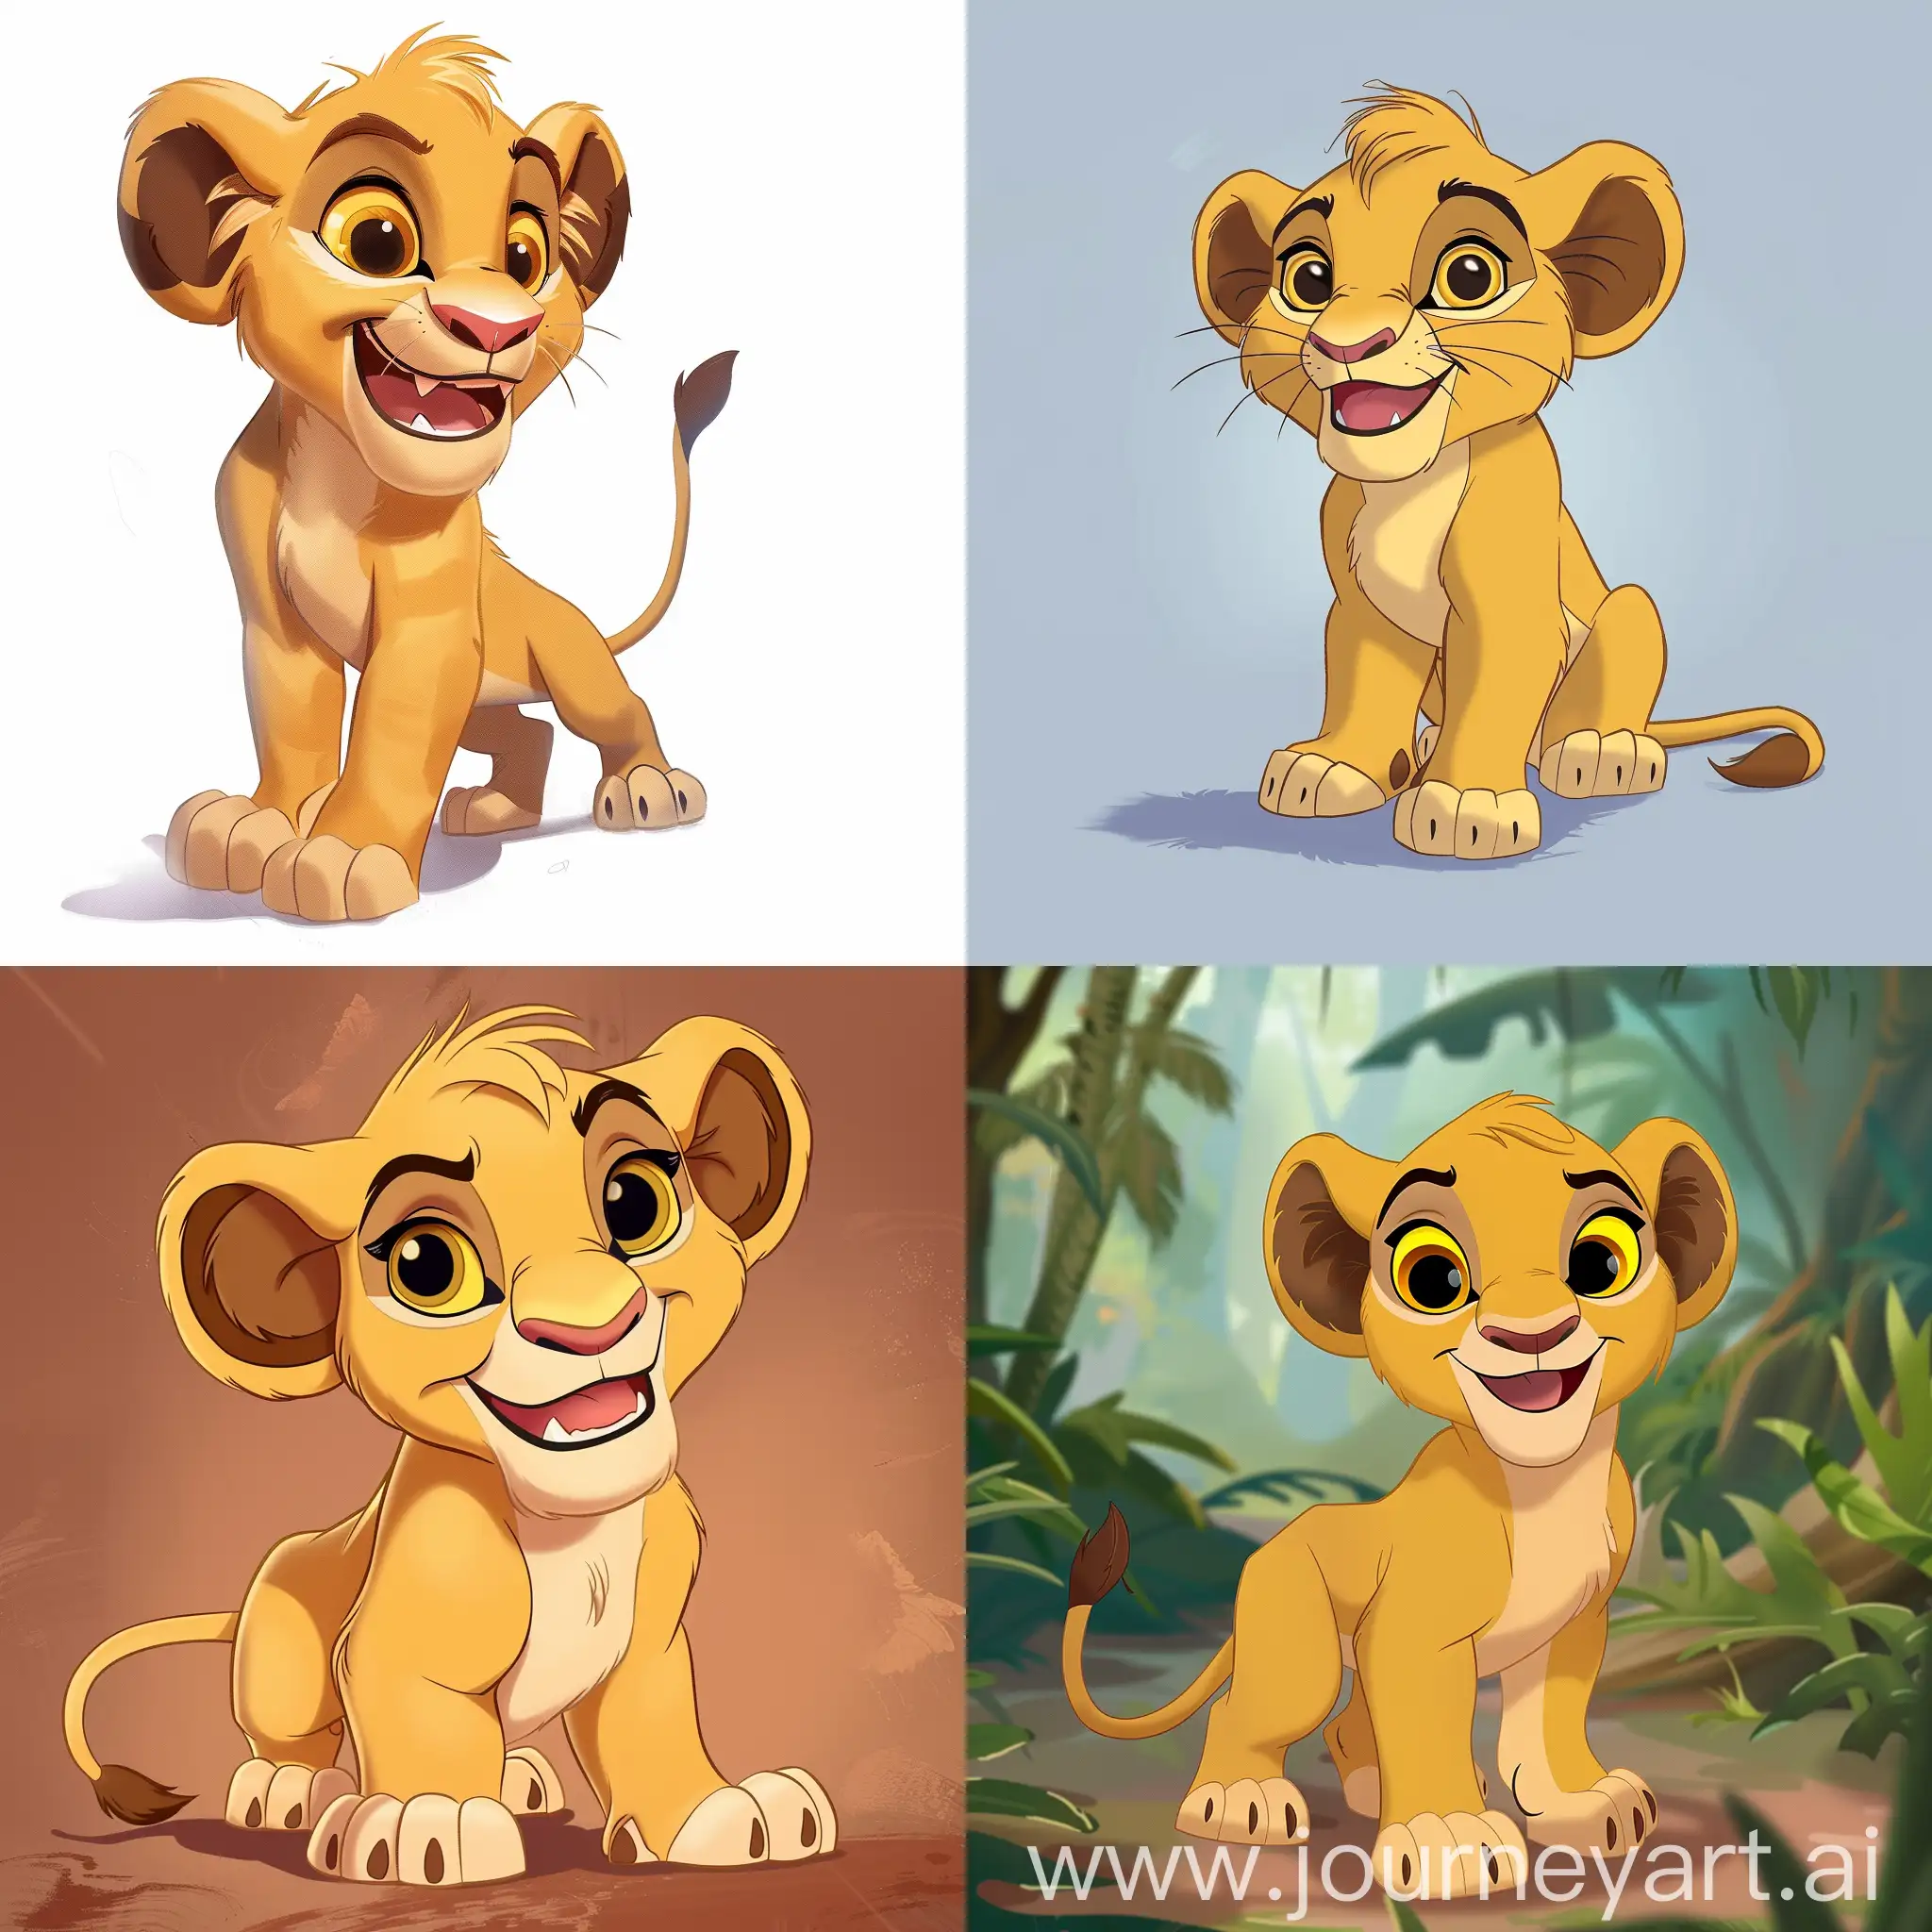 Friendly-Cartoon-Lion-Cub-with-a-Heartwarming-Smile